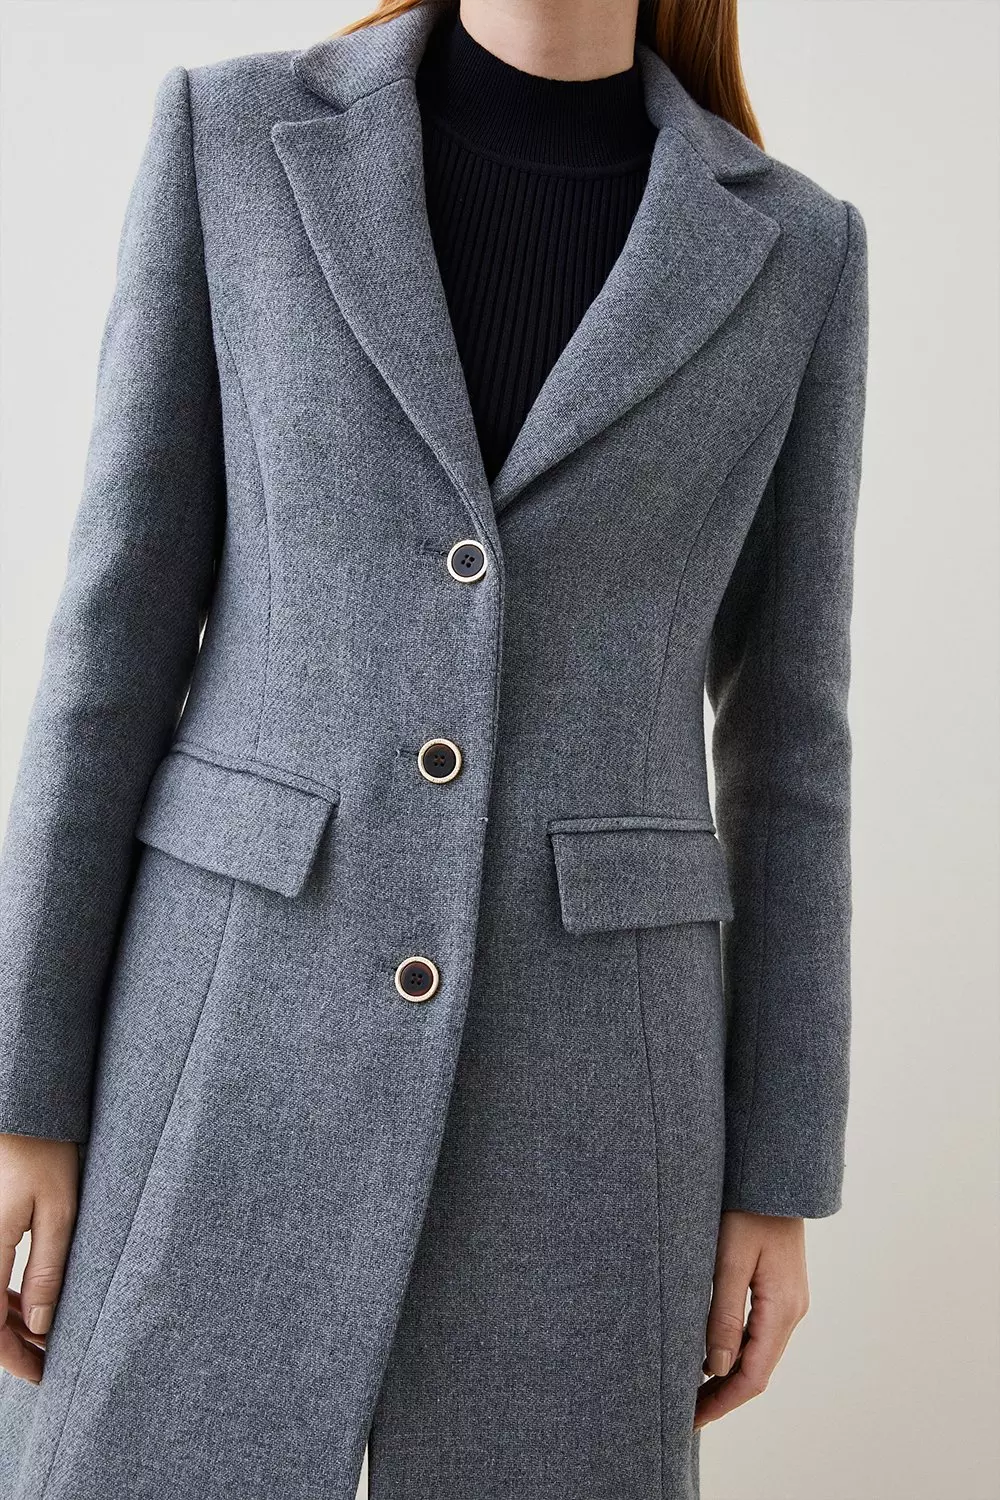 Italian Wool Mix Single Breasted Tailored Coat